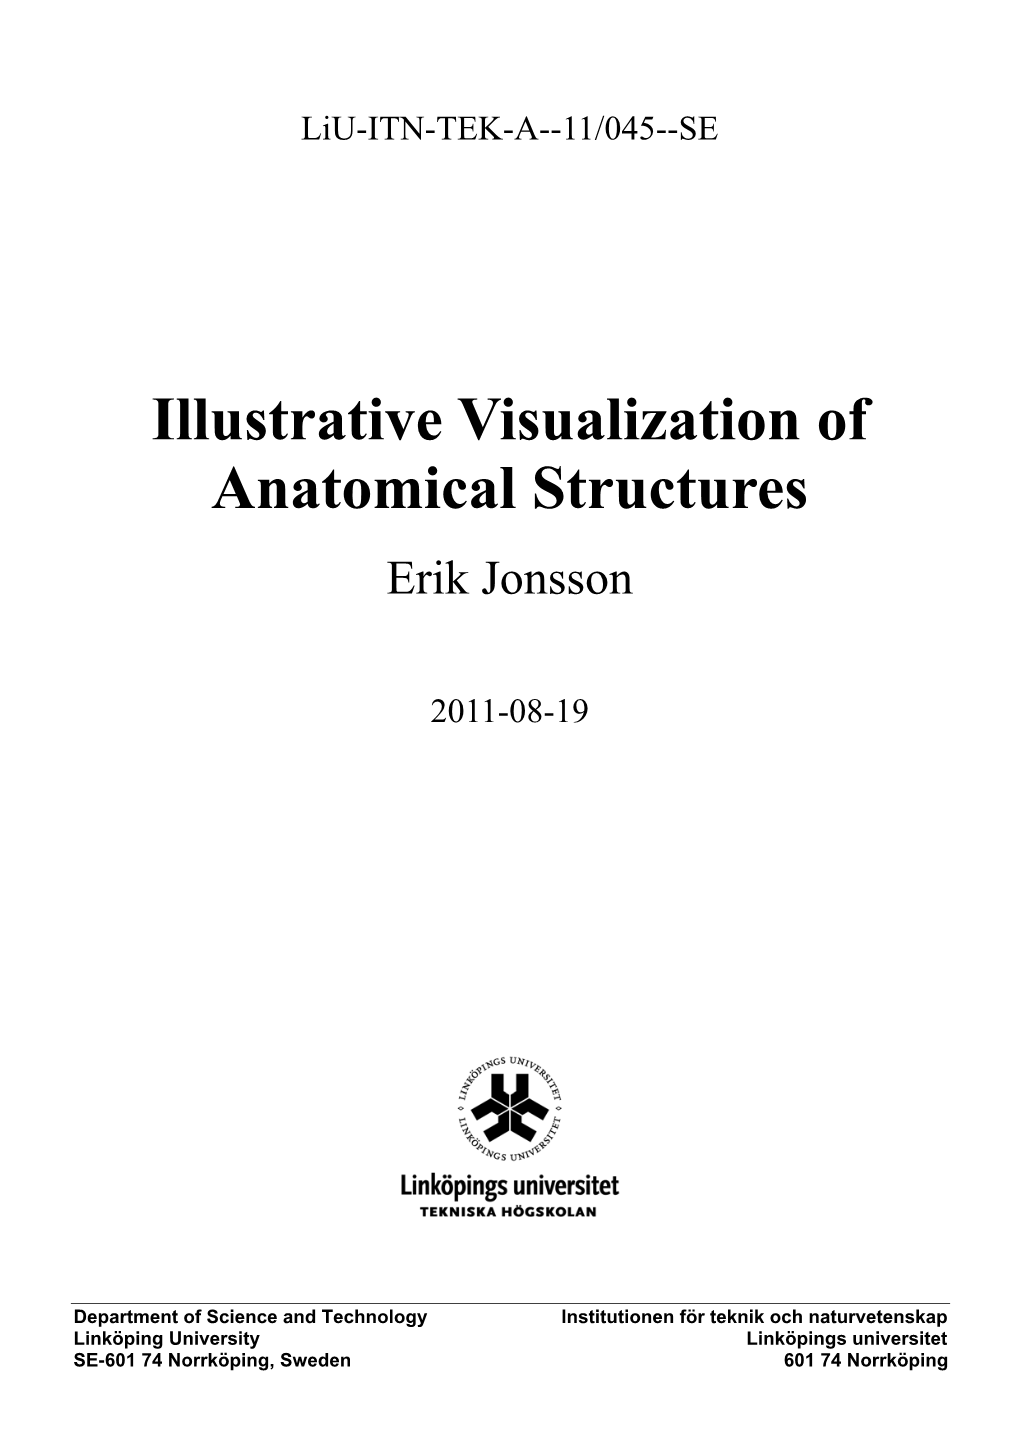 Illustrative Visualization of Anatomical Structures Erik Jonsson